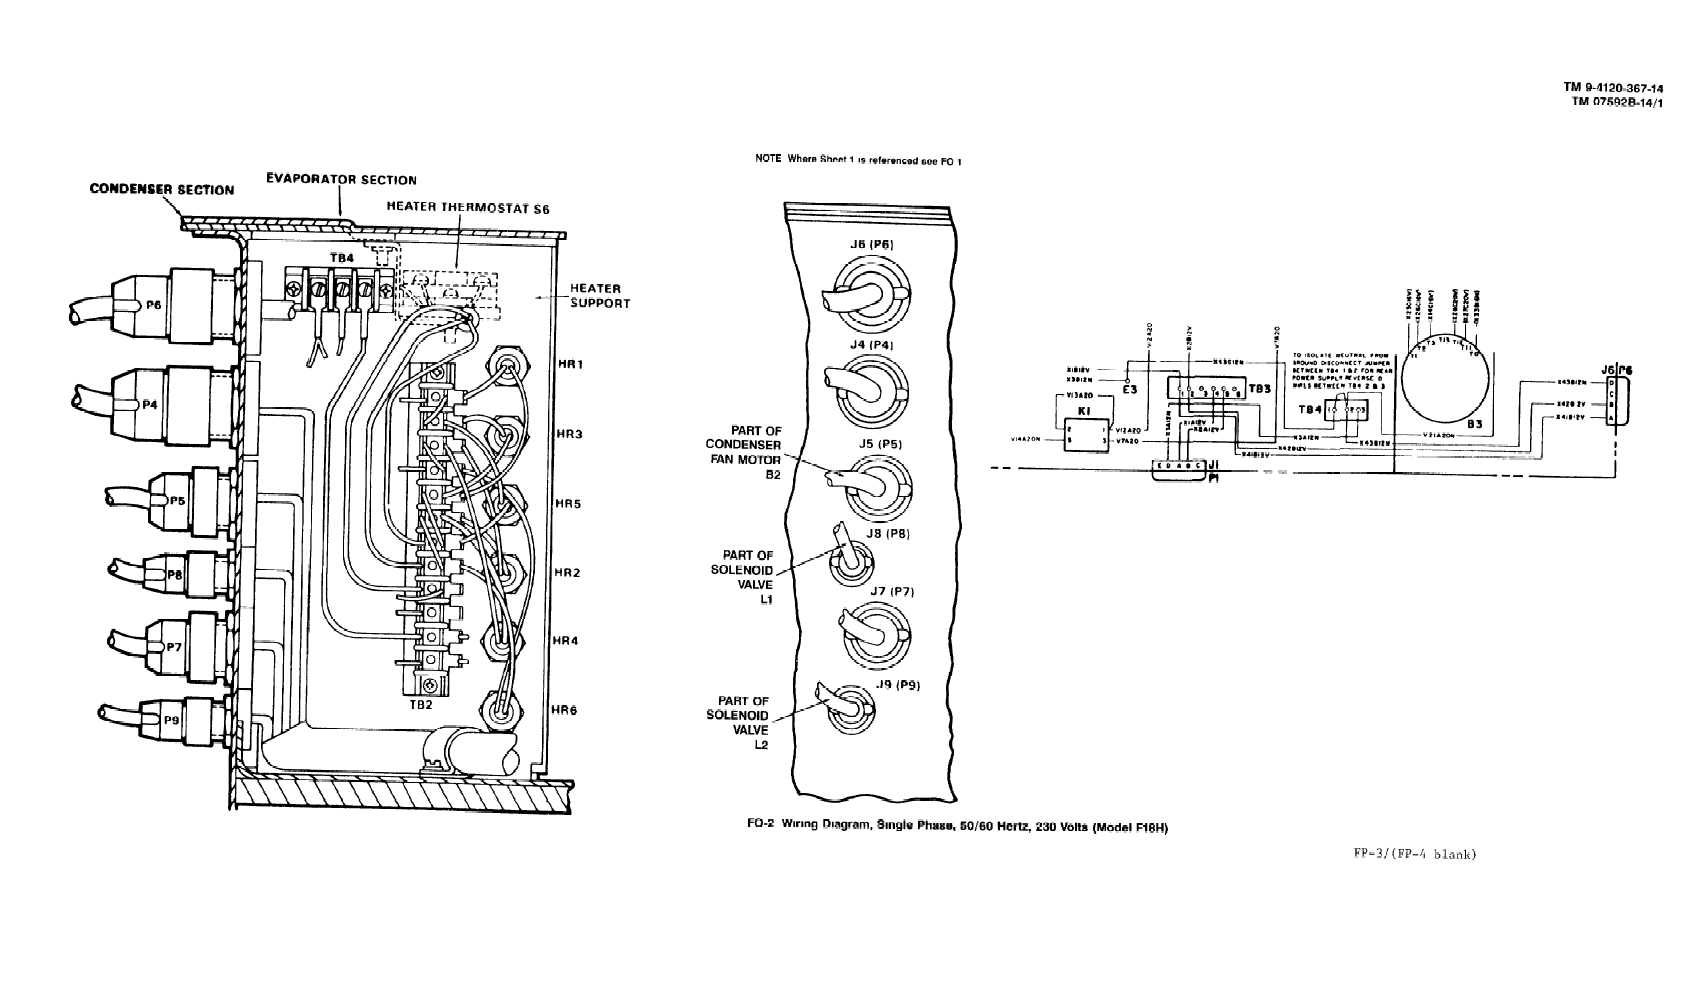 ironton ac winch motor wiring diagram